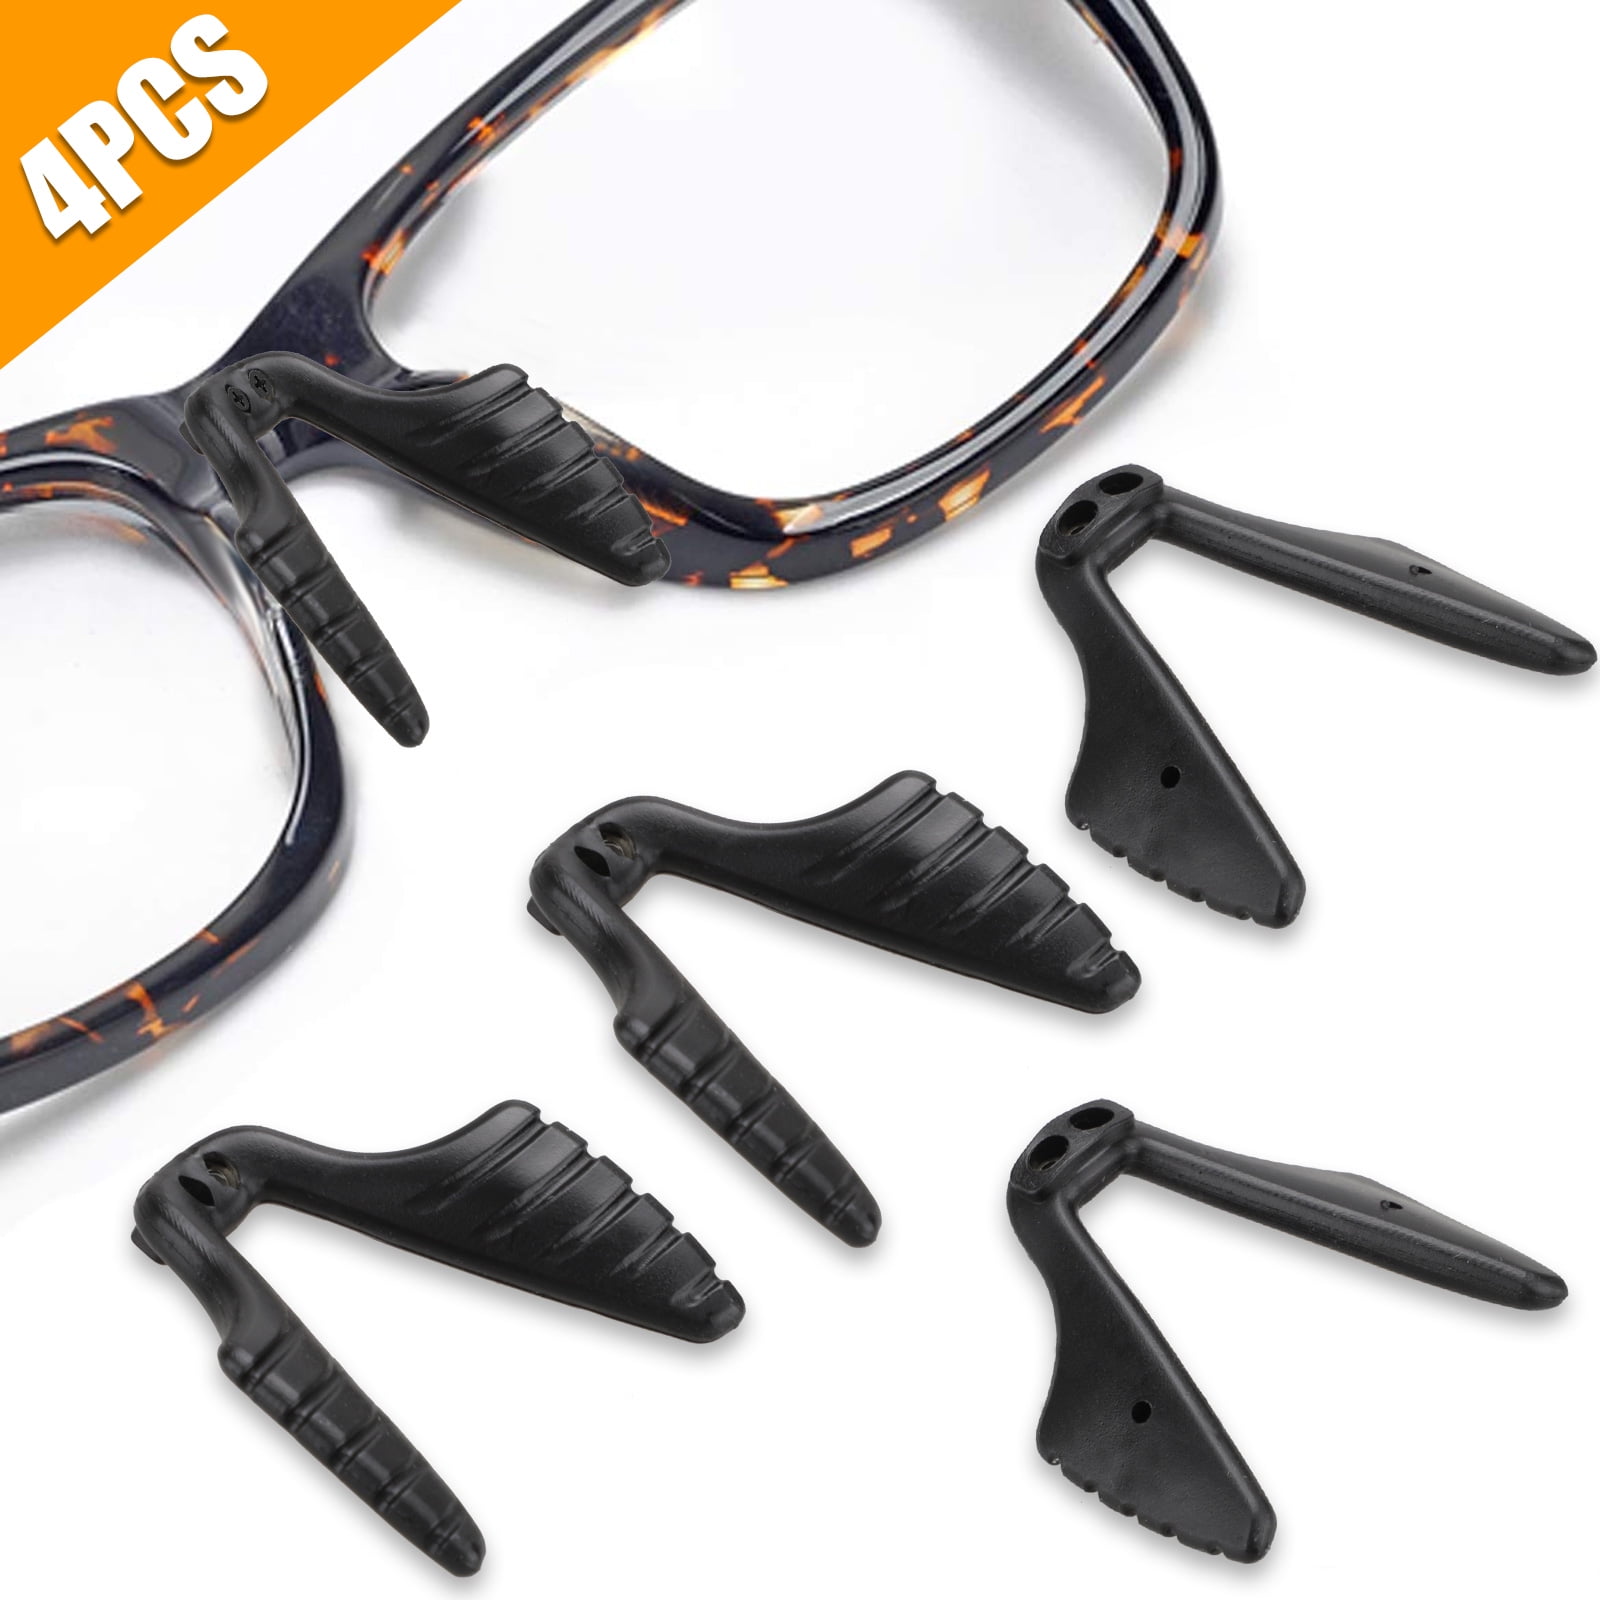 4pcs Eye Glasses Nose Pads, Stick On Anti-slip Soft Silicone